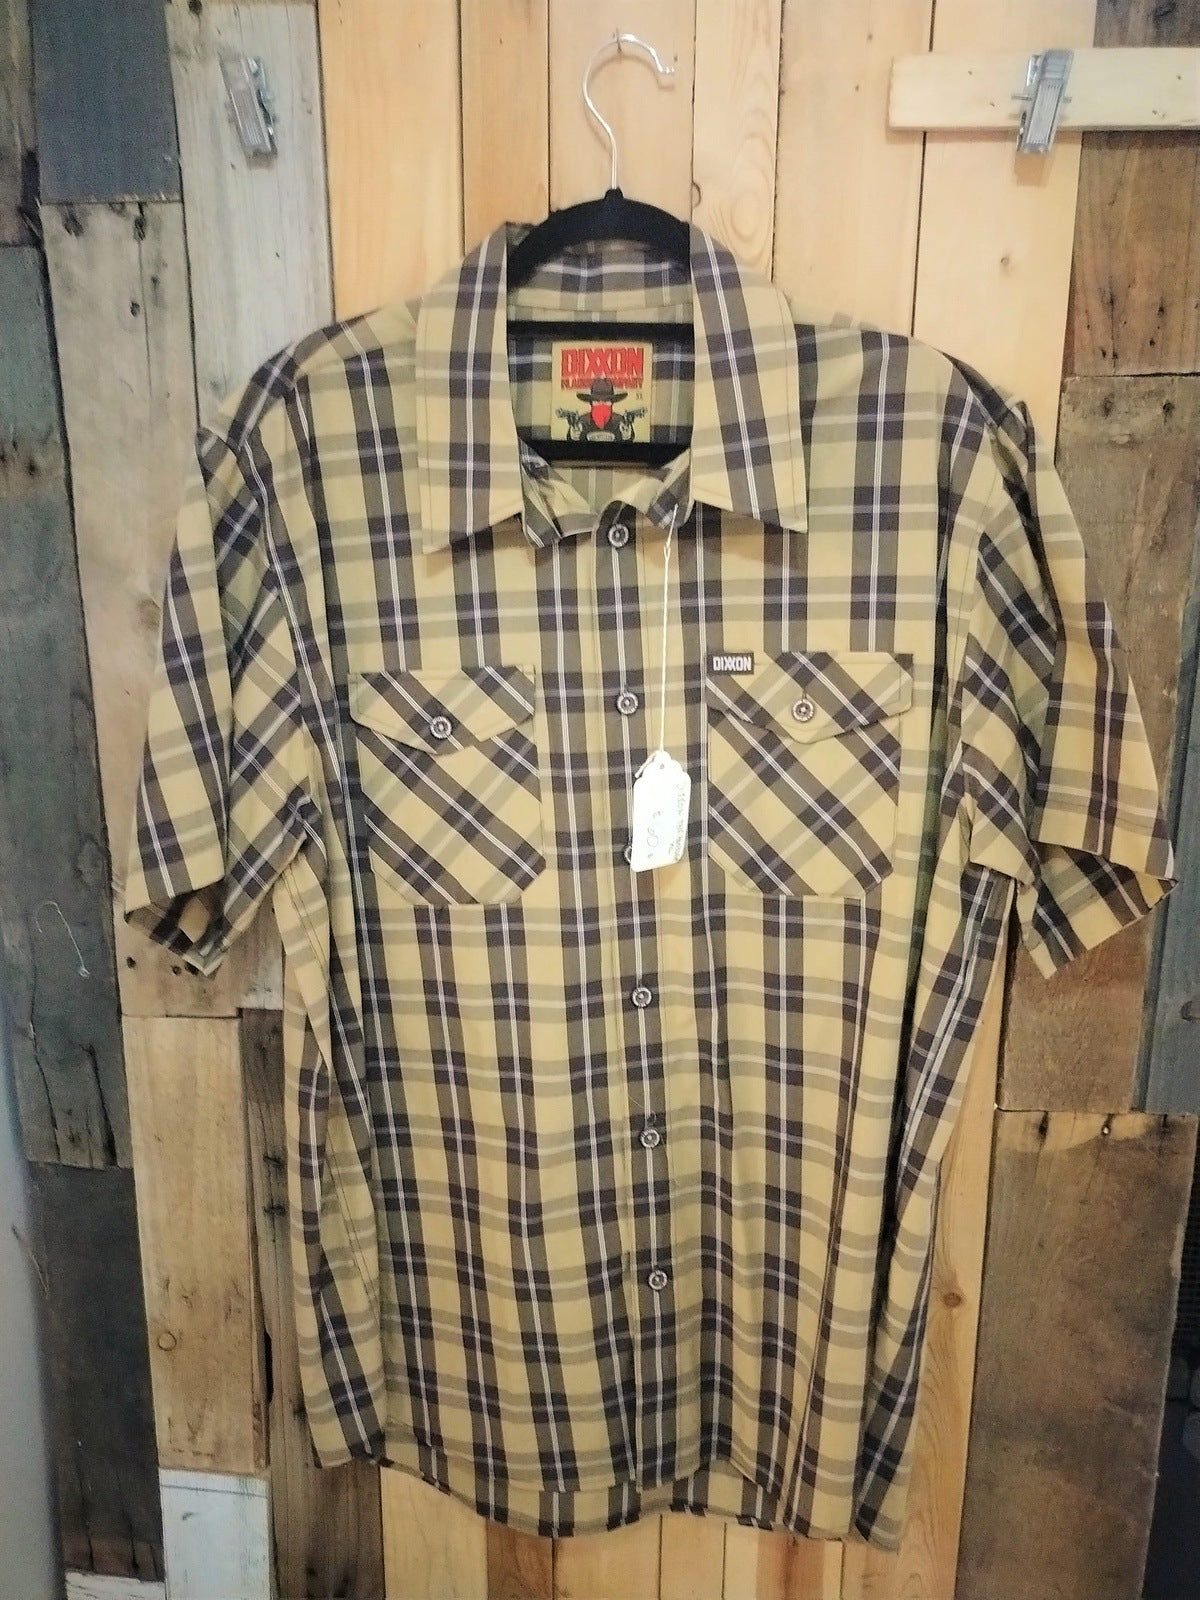 Dixxon Flannel Company "The Rustler" Men's Short Sleeve Button Up Khaki Plaid Shirt Size XL